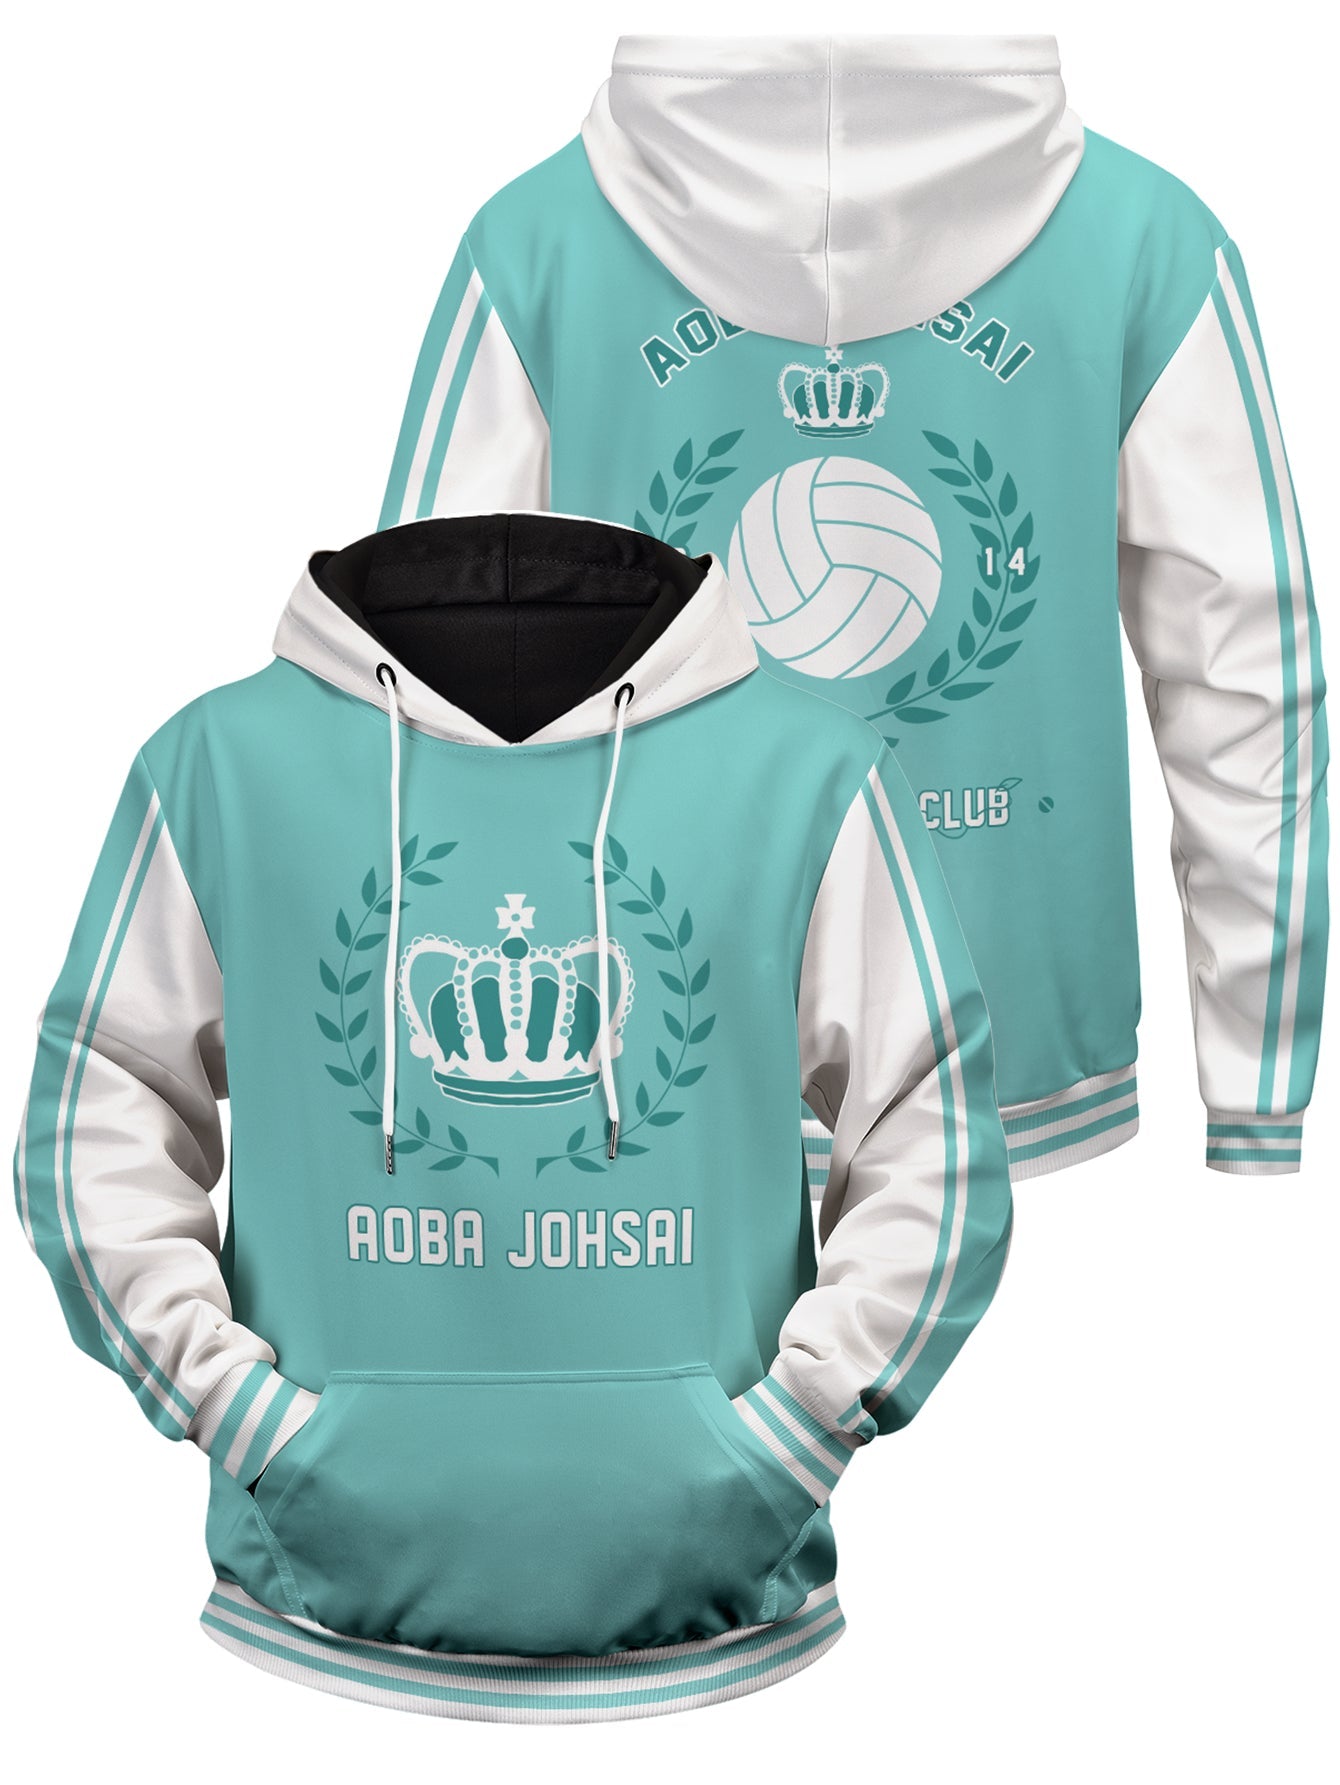 Aoba Johsai Jersey